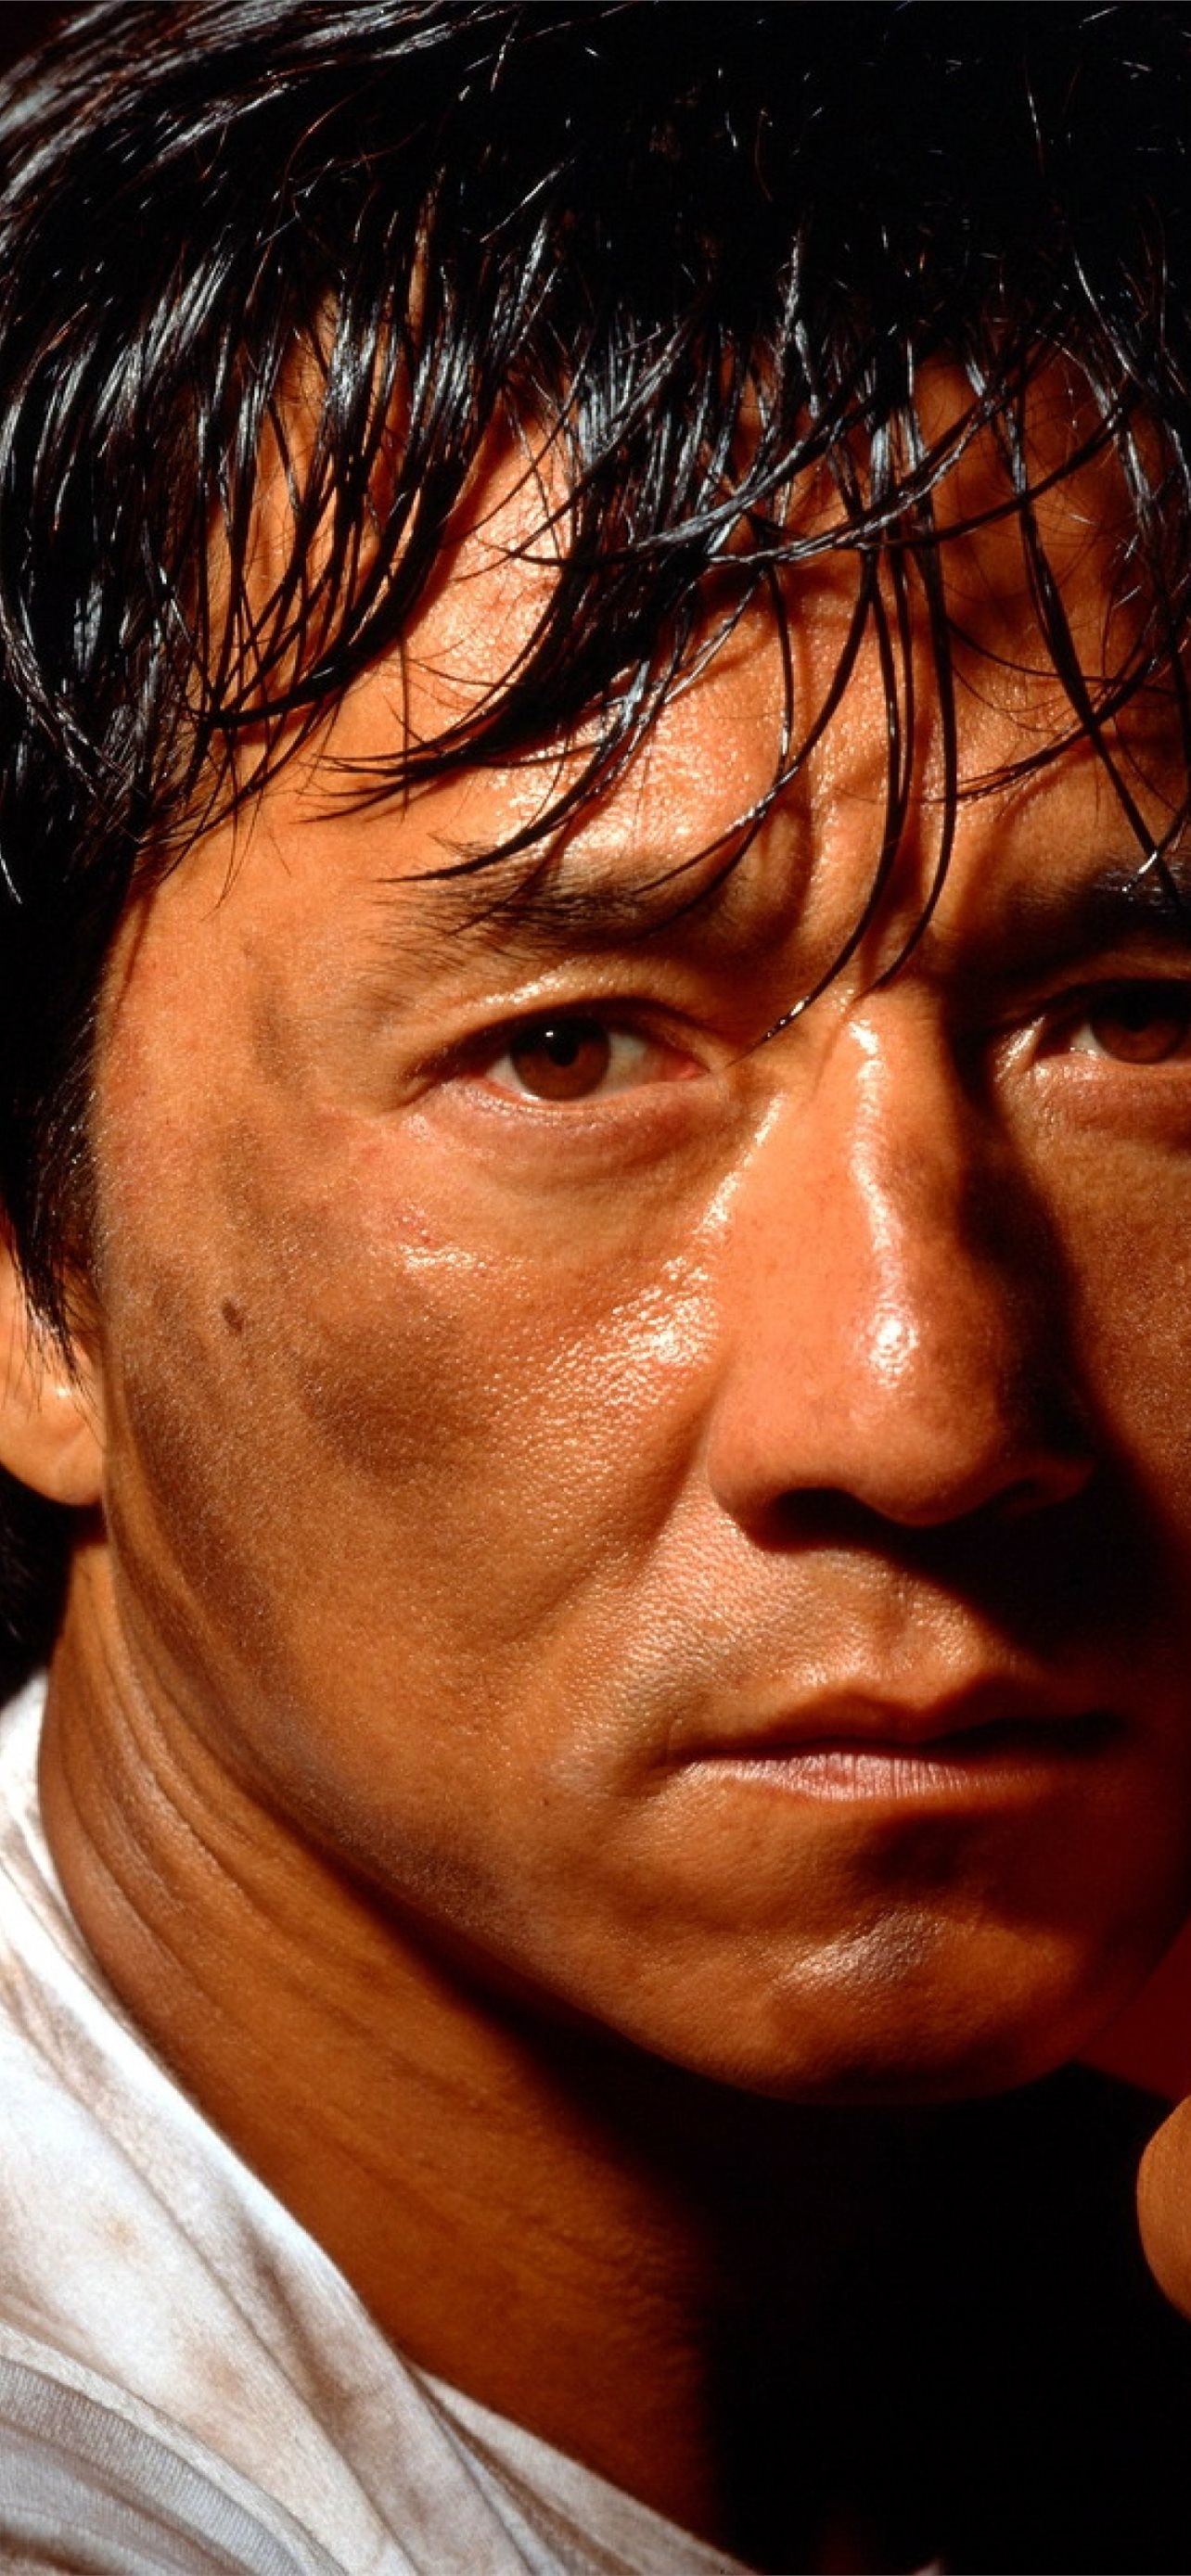 17+] Jackie Chan 4K Wallpapers - WallpaperSafari